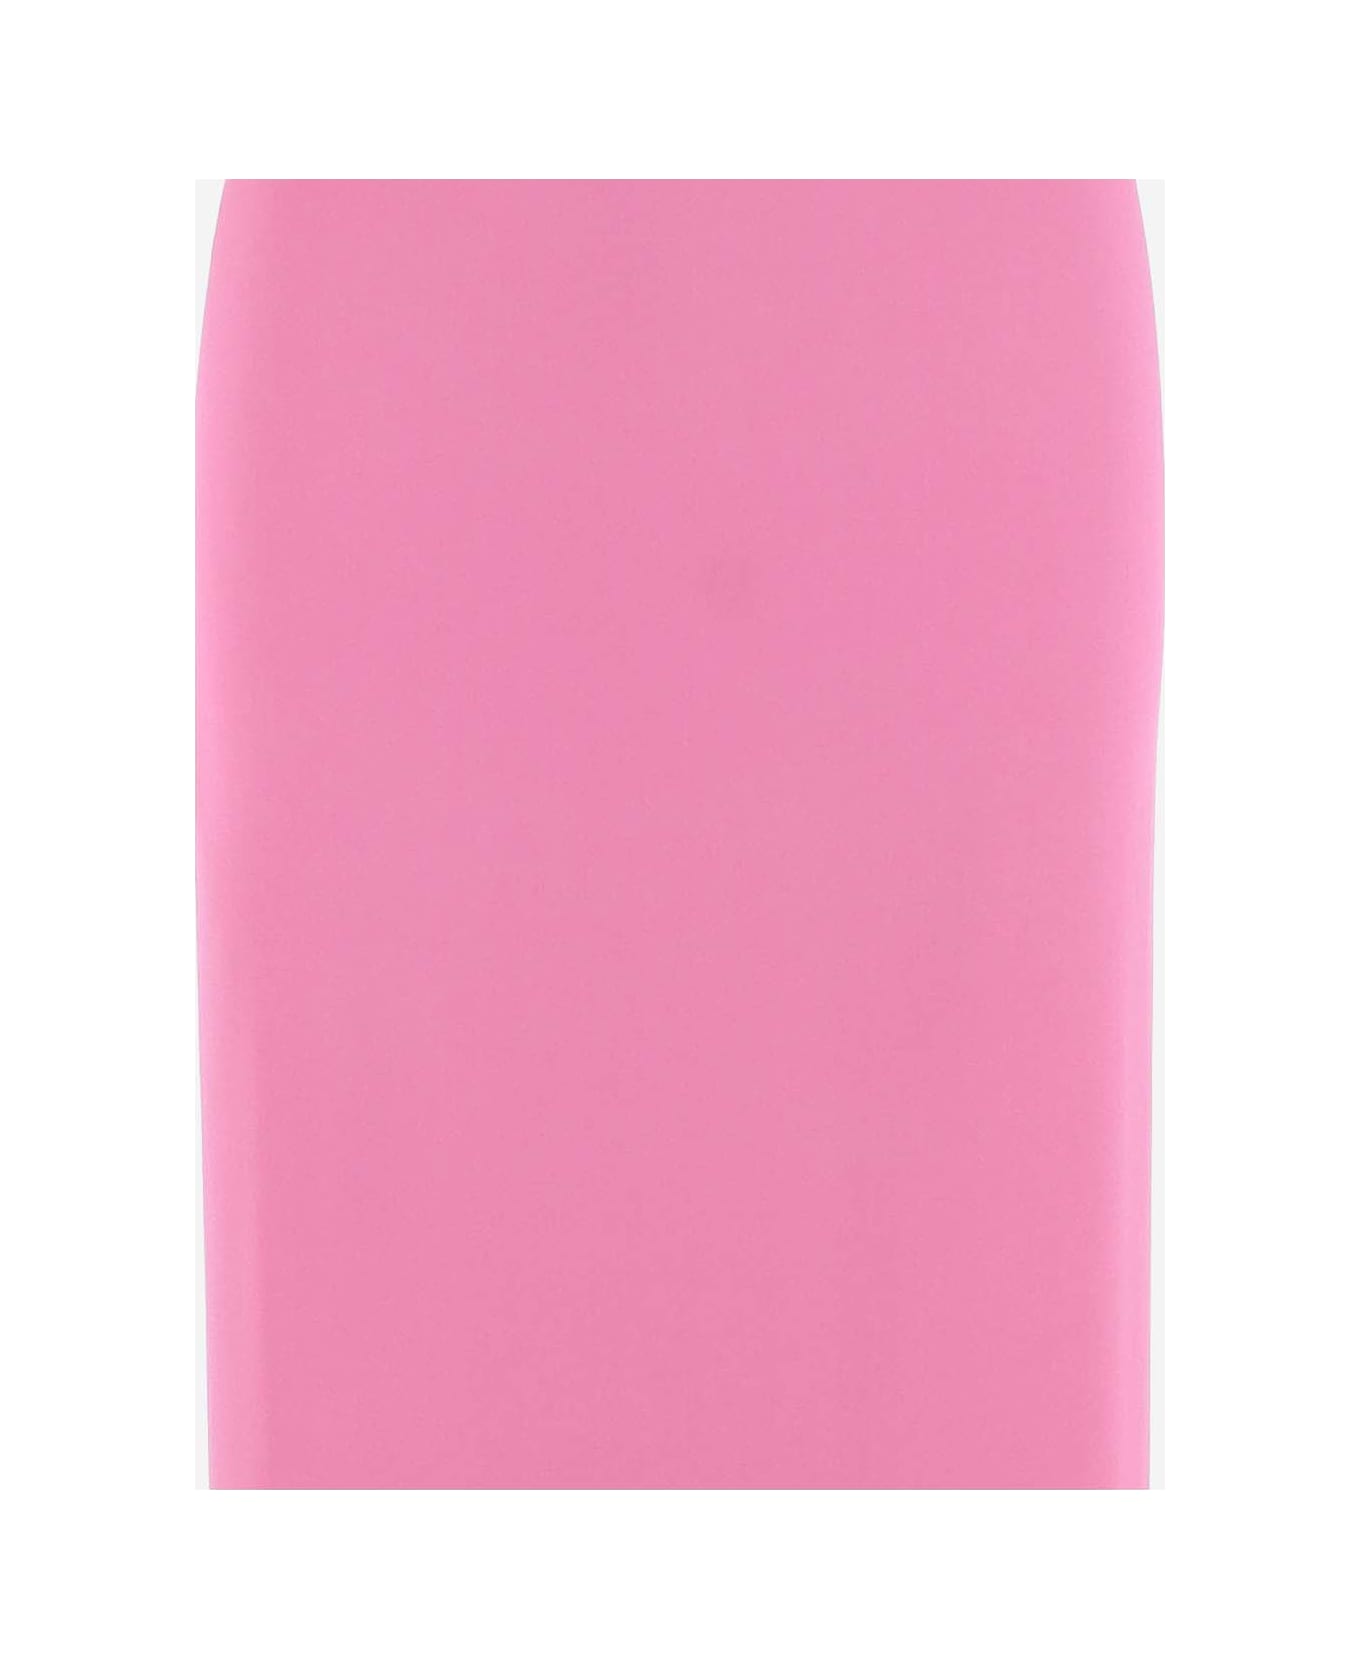 Stephan Janson Silk Long Dress - Pink